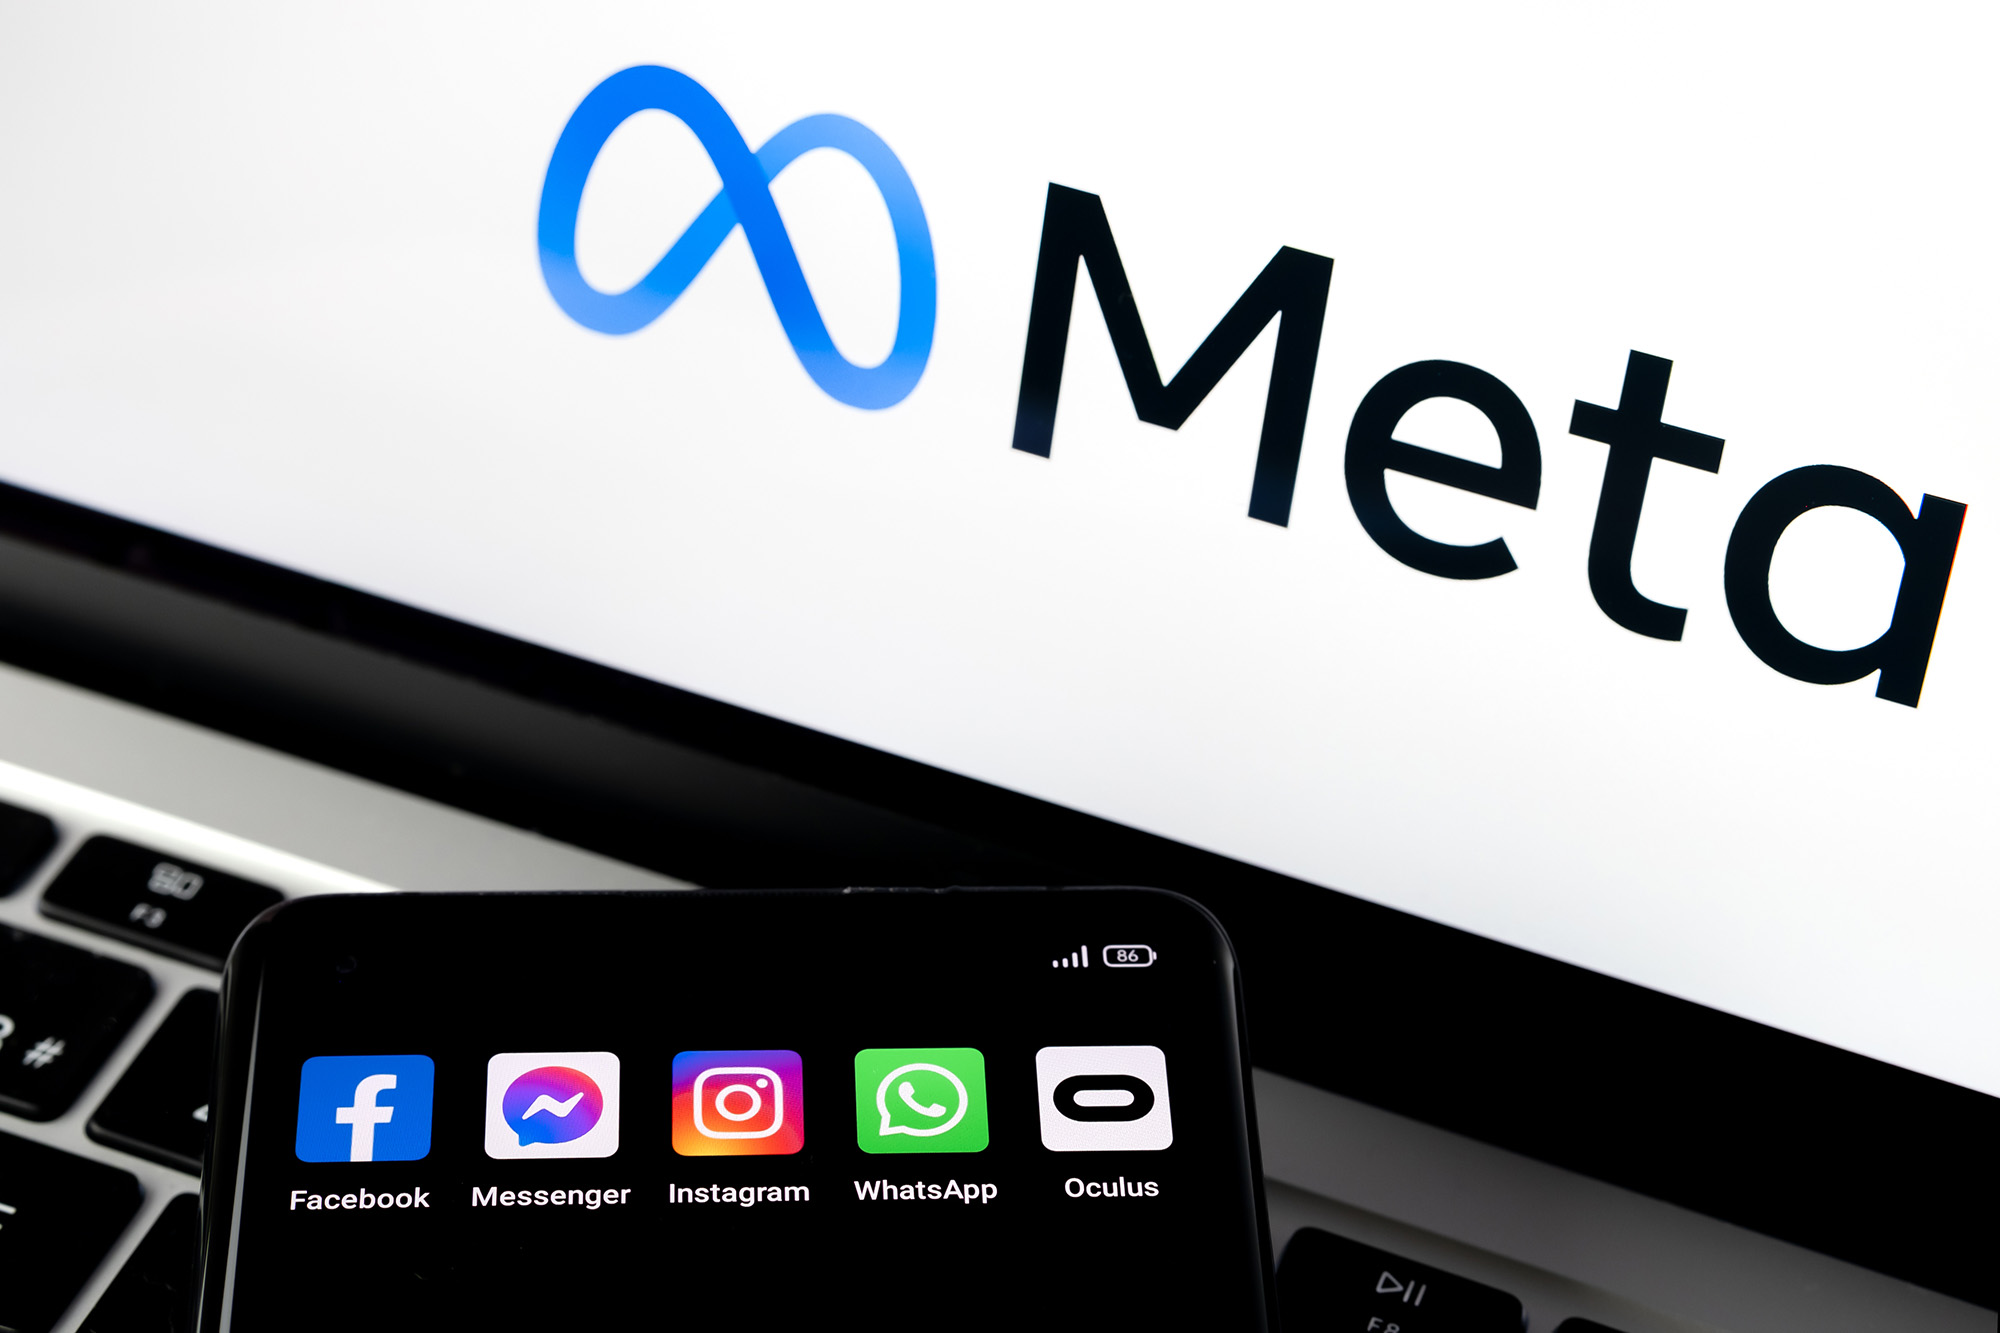 METAVERSE META FACEBOOK. Silhouette of smartphone with Facebook, Messenger, whatsApp, Instagram, Oculus apps and blurred META logo on background. Rebrand of Facebook. Stafford, UK, October 28, 2021